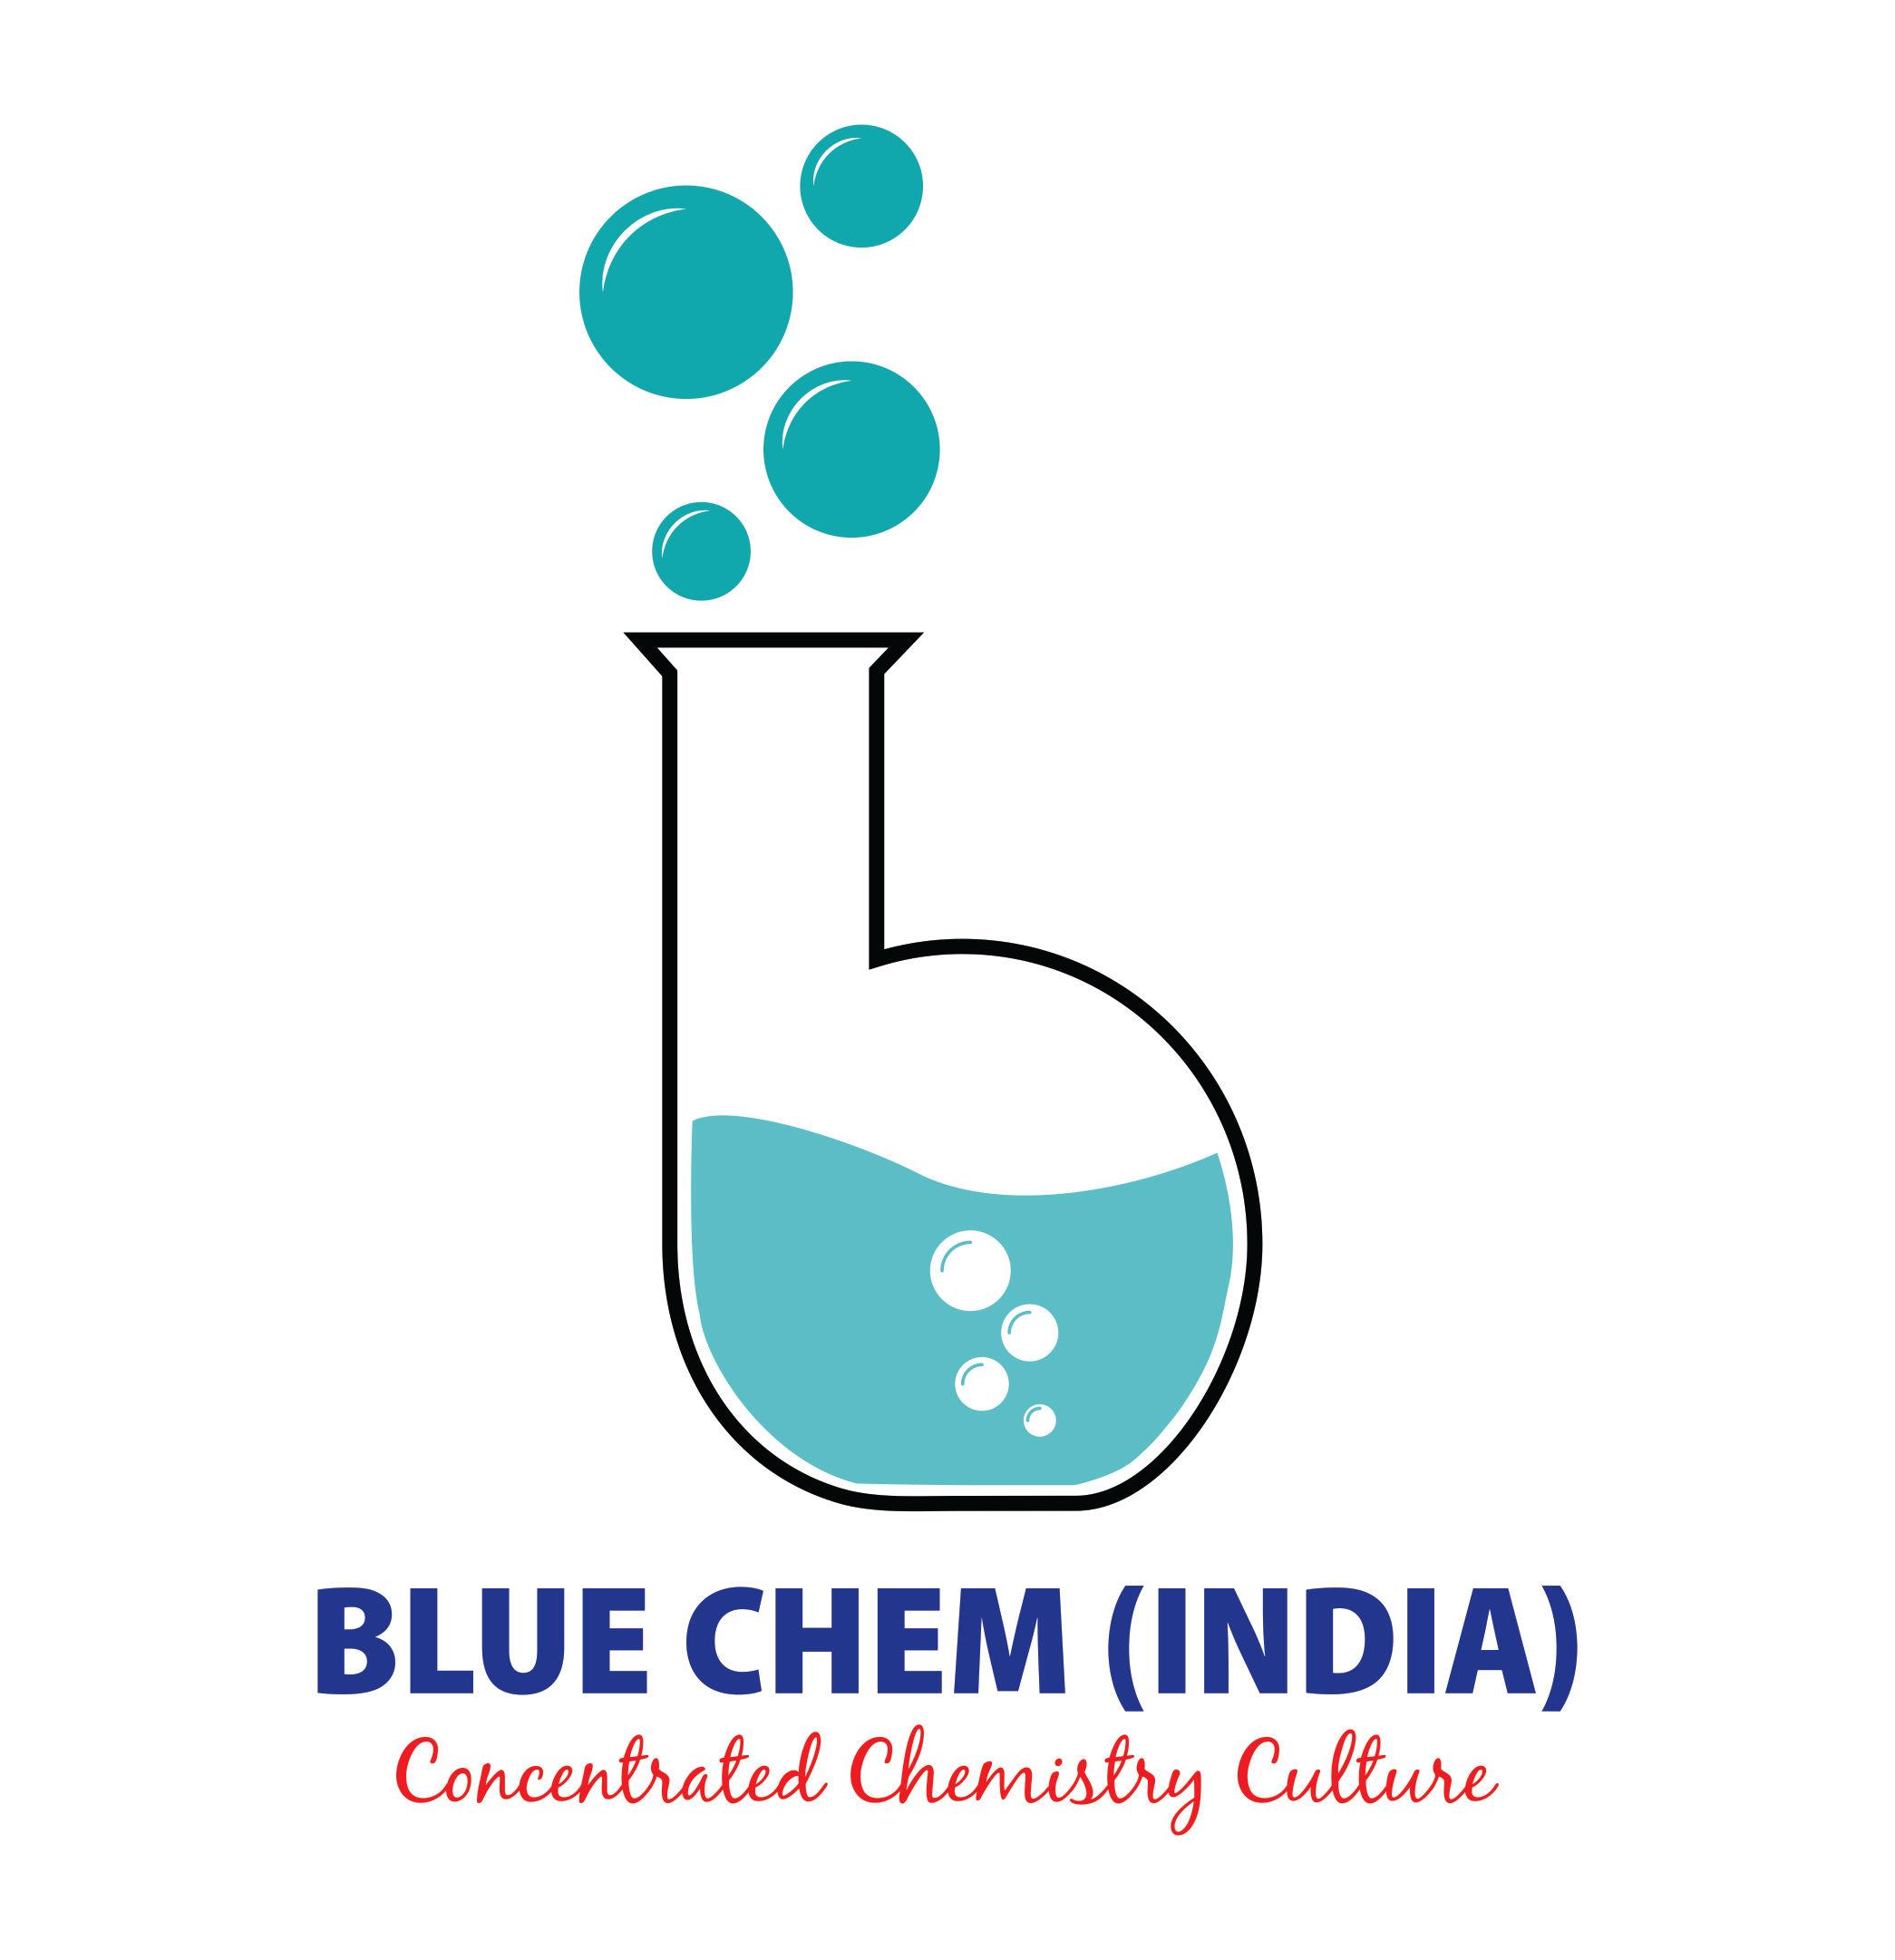 BLUE CHEM (INDIA)